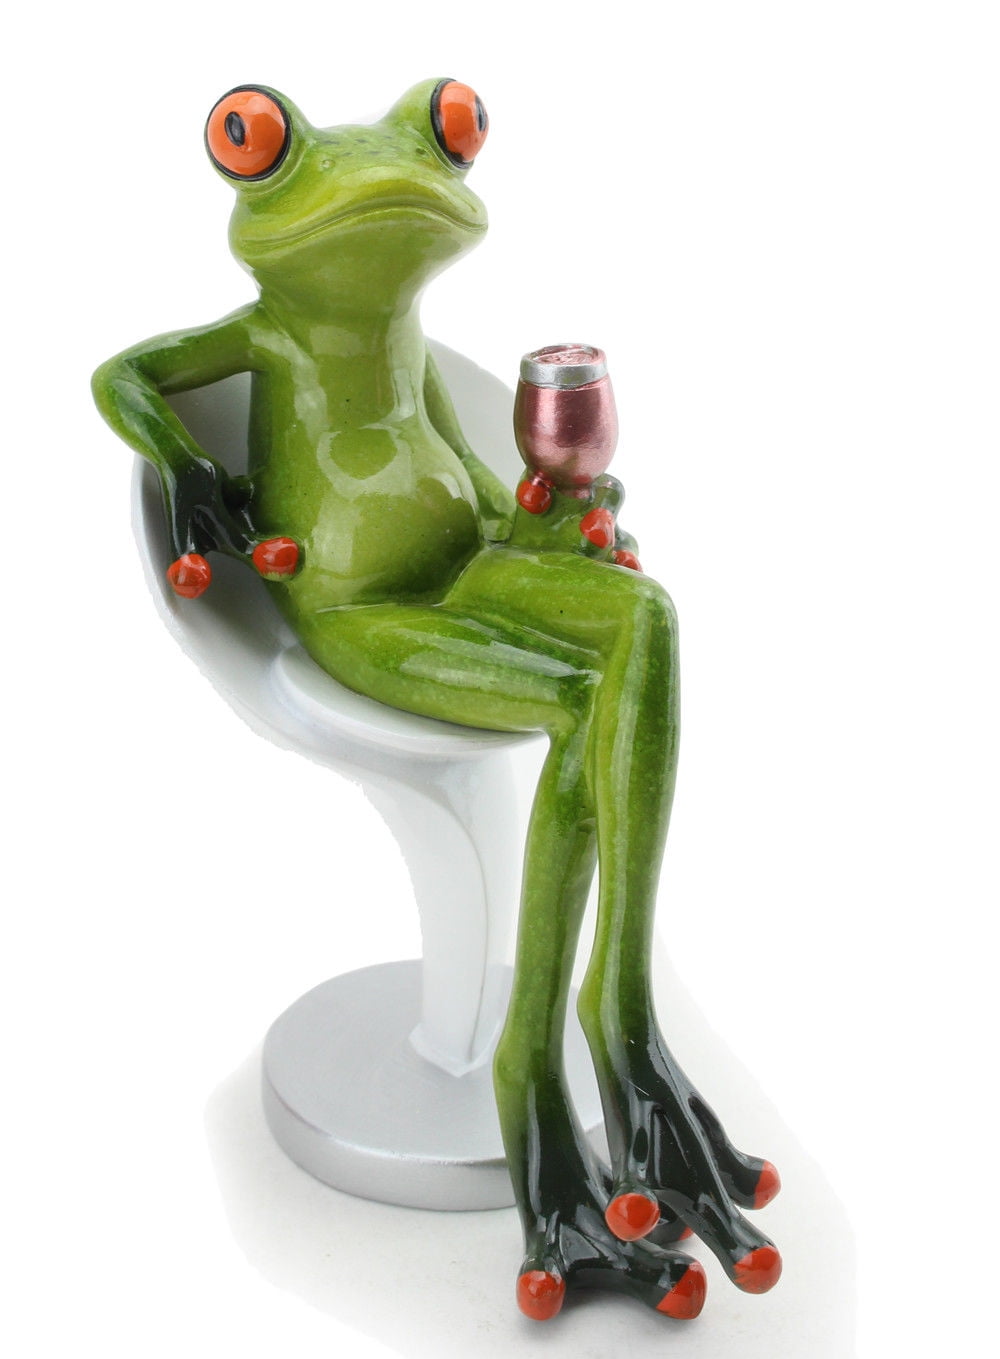 Novelty Funny Frog Figurine Taking A Shower Figurines Home Decor Green & Orange 